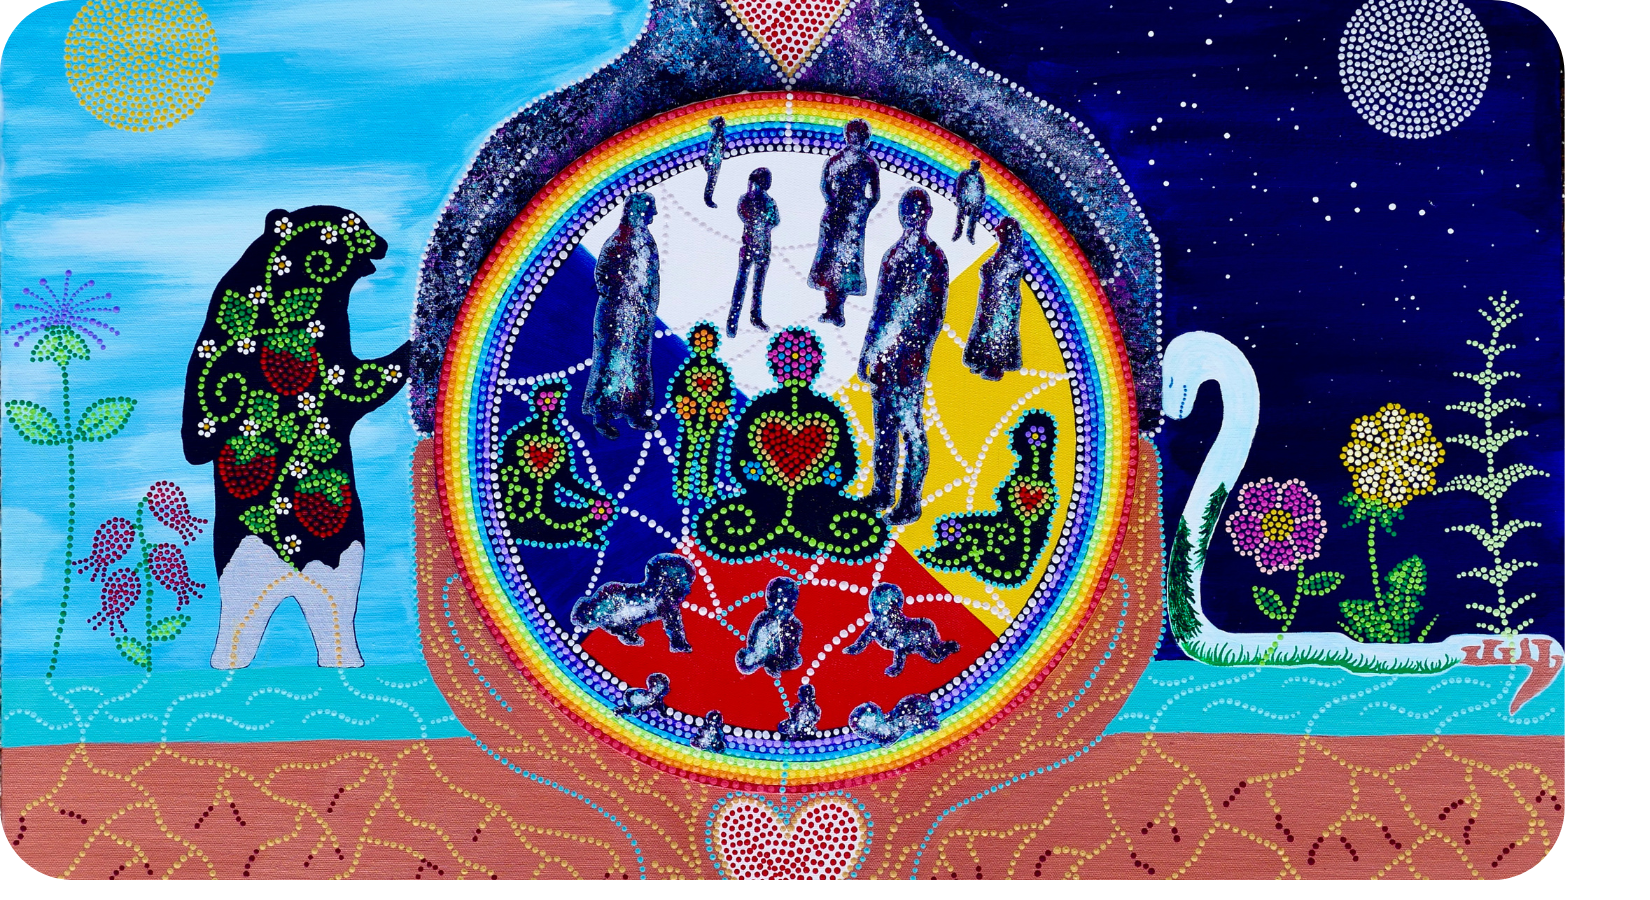 Original artwork by Cree/Métis artist Karlee Fellner. The title of this piece is nanâtawihiwêwin, or healing.